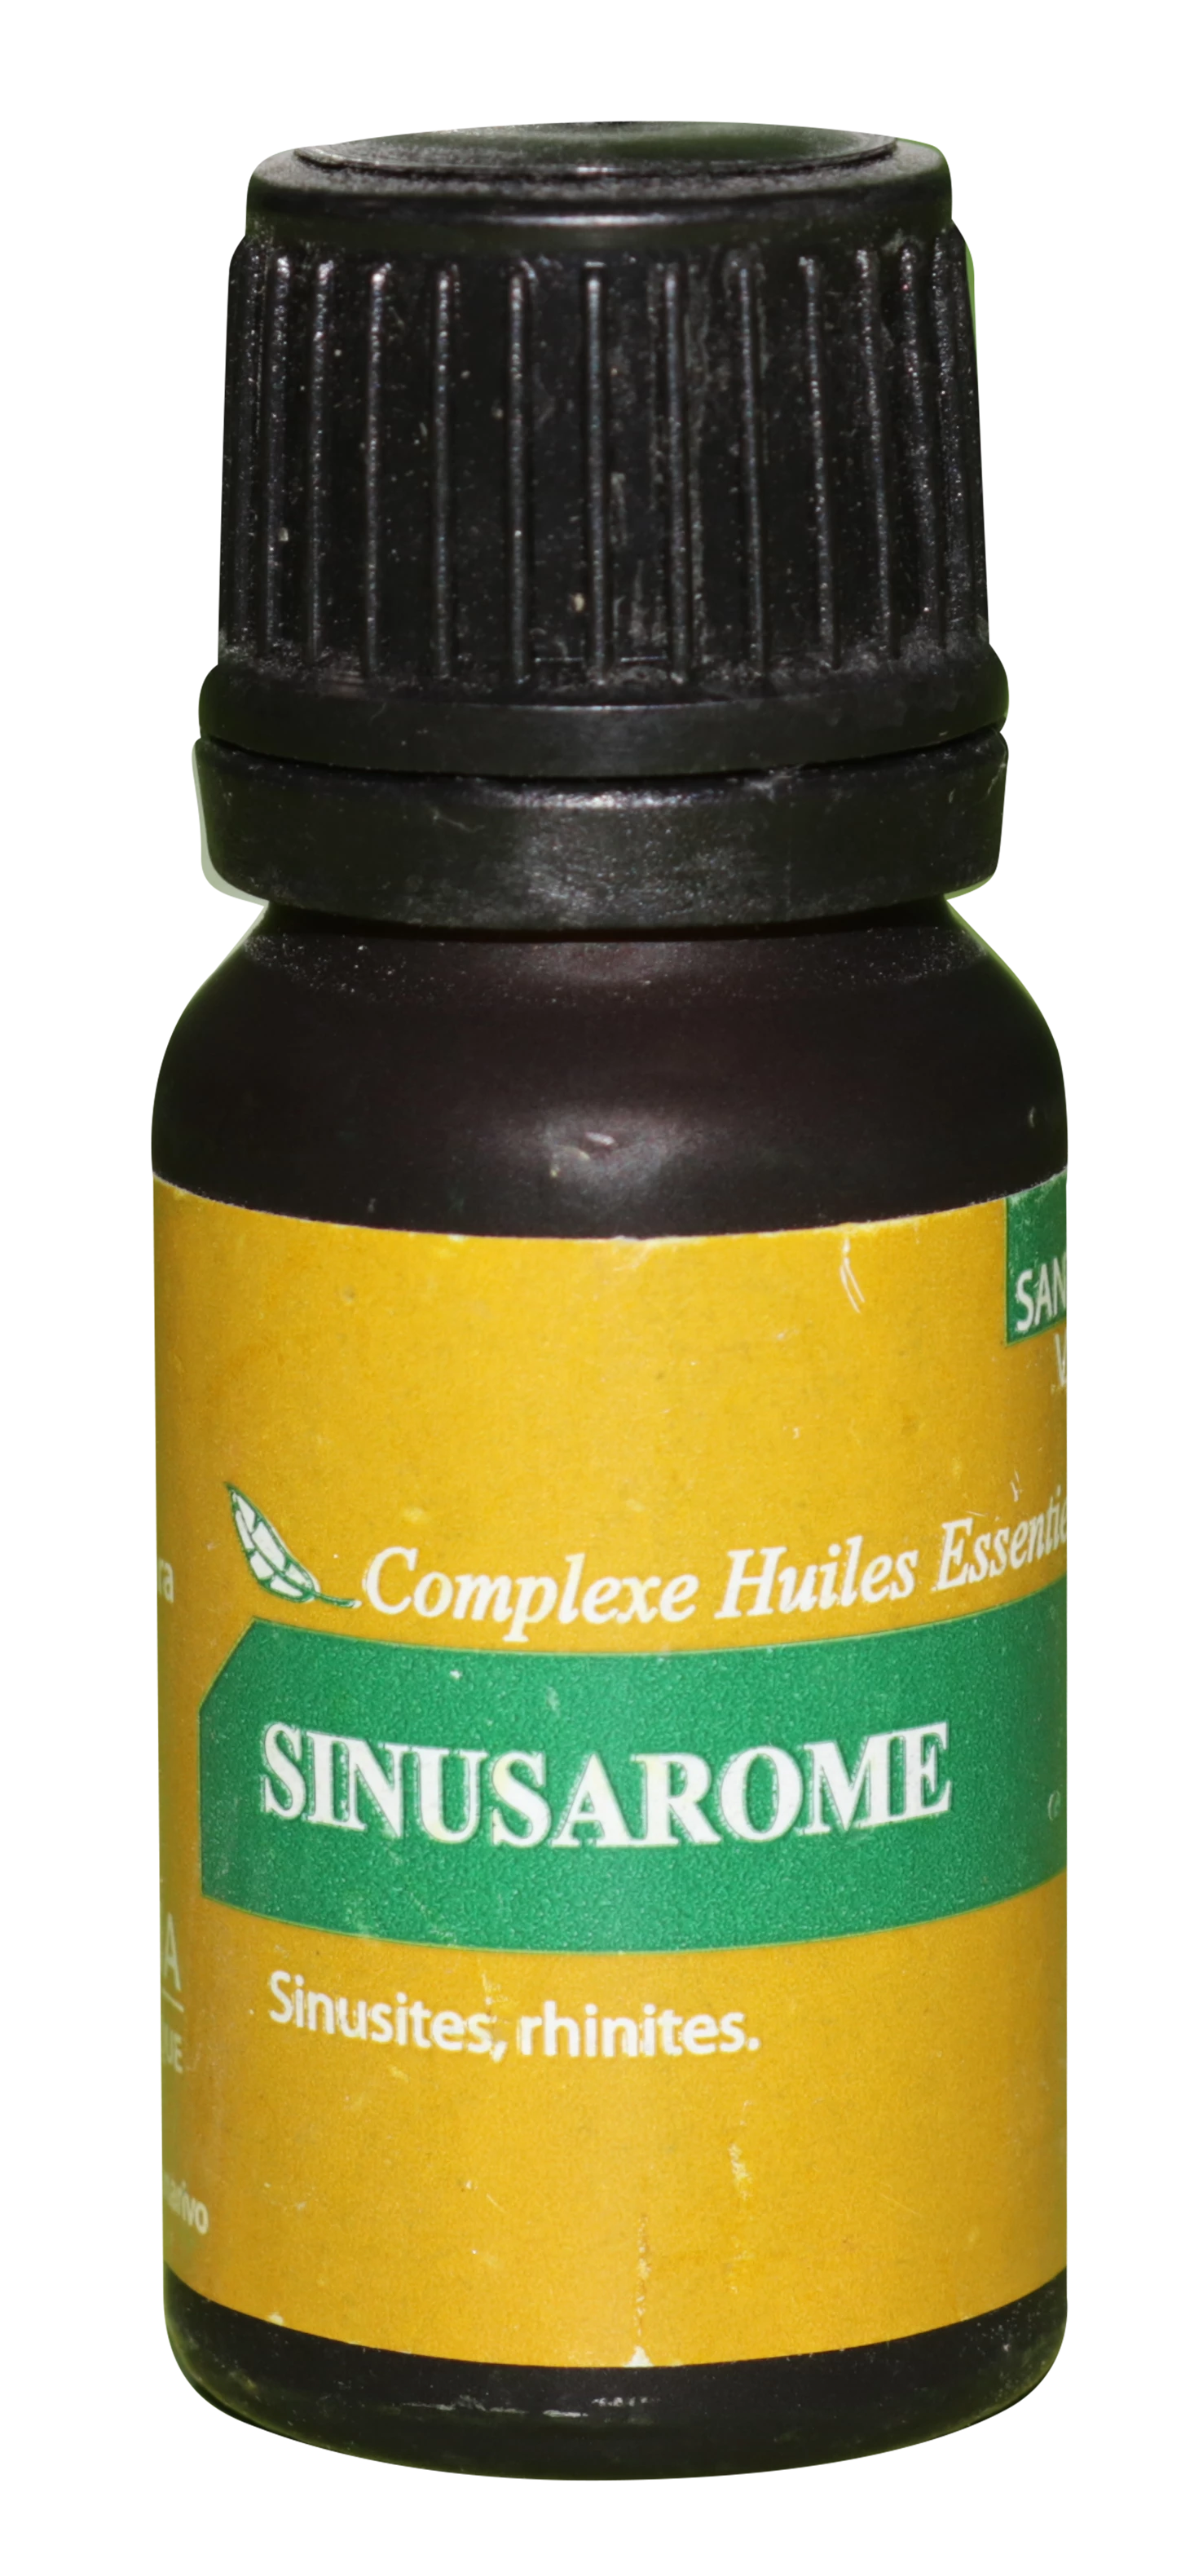 Complessi di oli essenziali Sinusarome 10 ml - HOMEOPHARMA